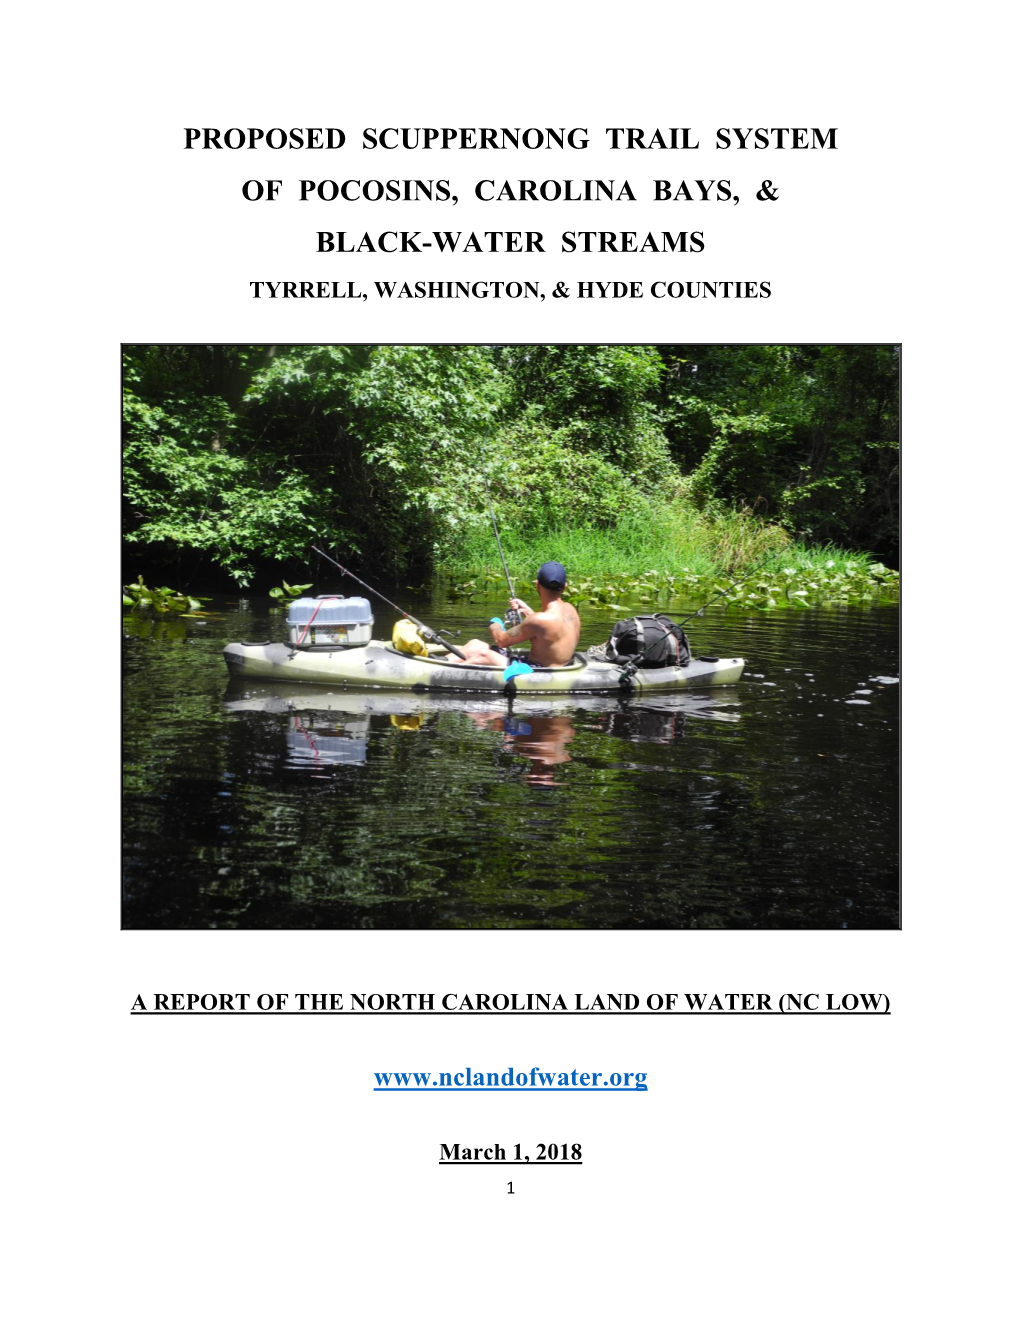 Proposed Scuppernong Trail System of Pocosins, Carolina Bays, & Black